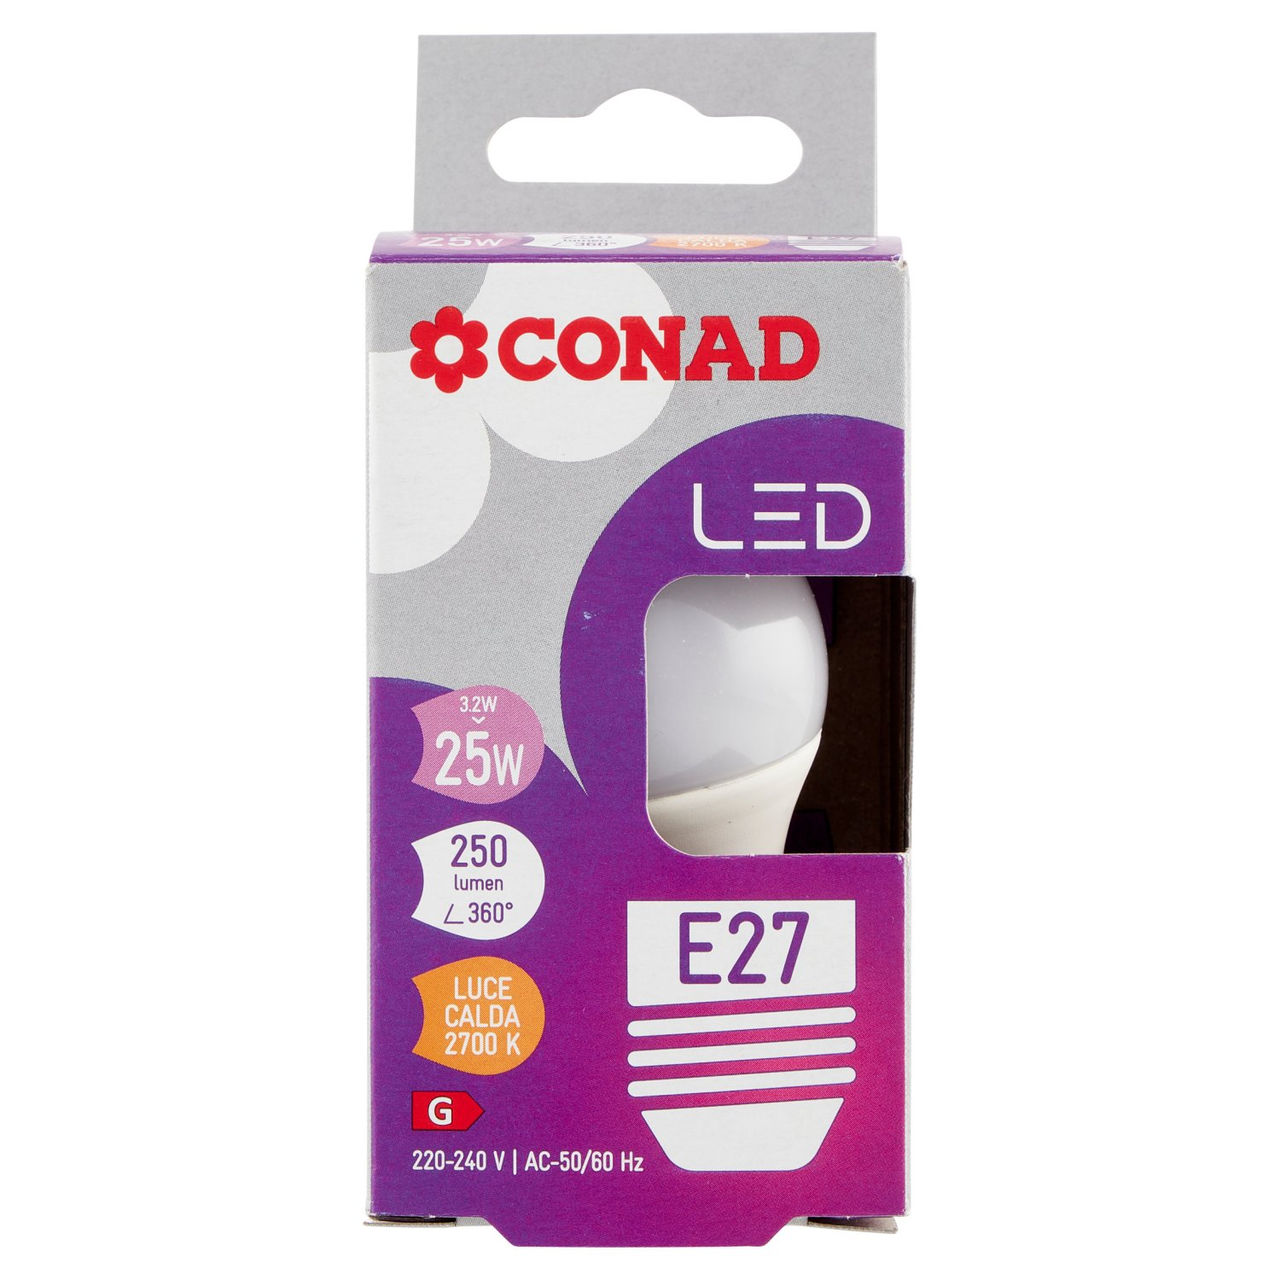 CONAD Led 3.2W 250 Lumen E27 Luce Calda